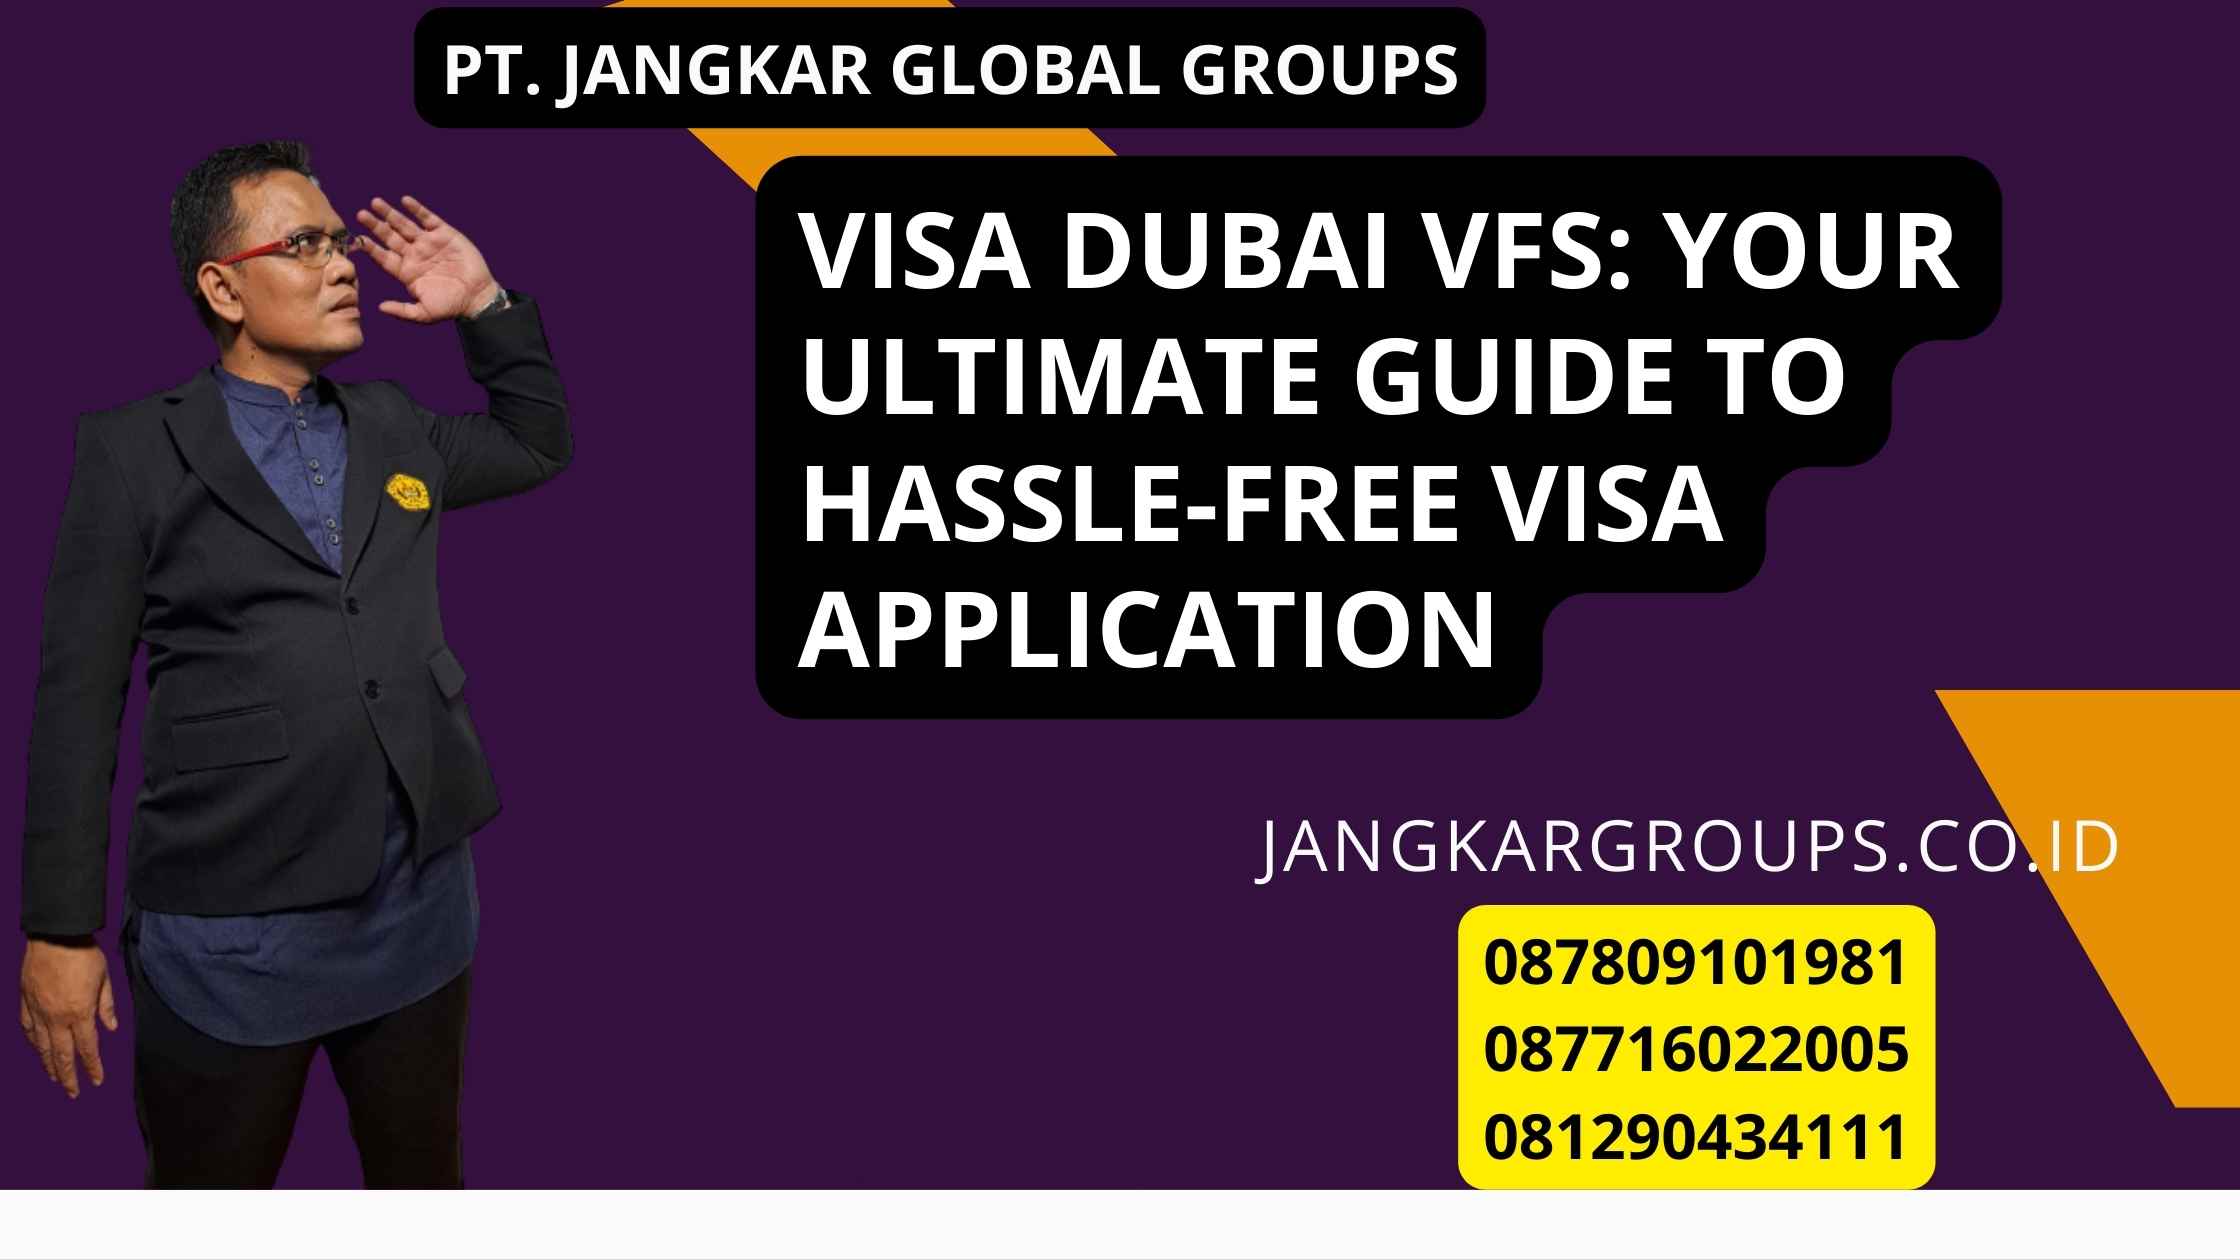 Visa Dubai Vfs: Your Ultimate Guide to Hassle-Free Visa Application